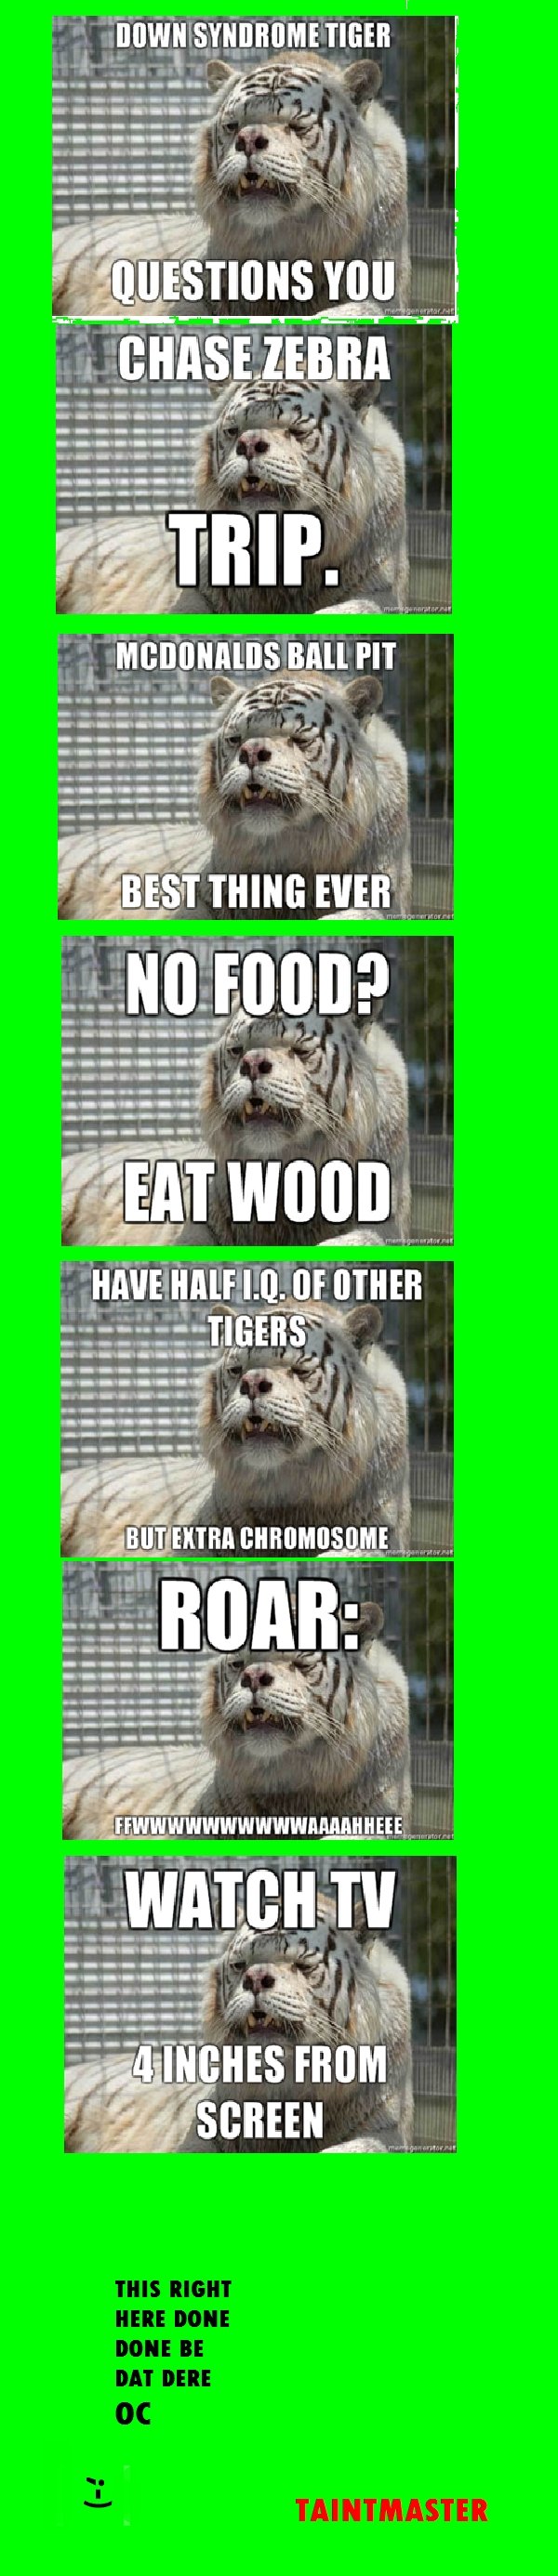 downsindrome tiger